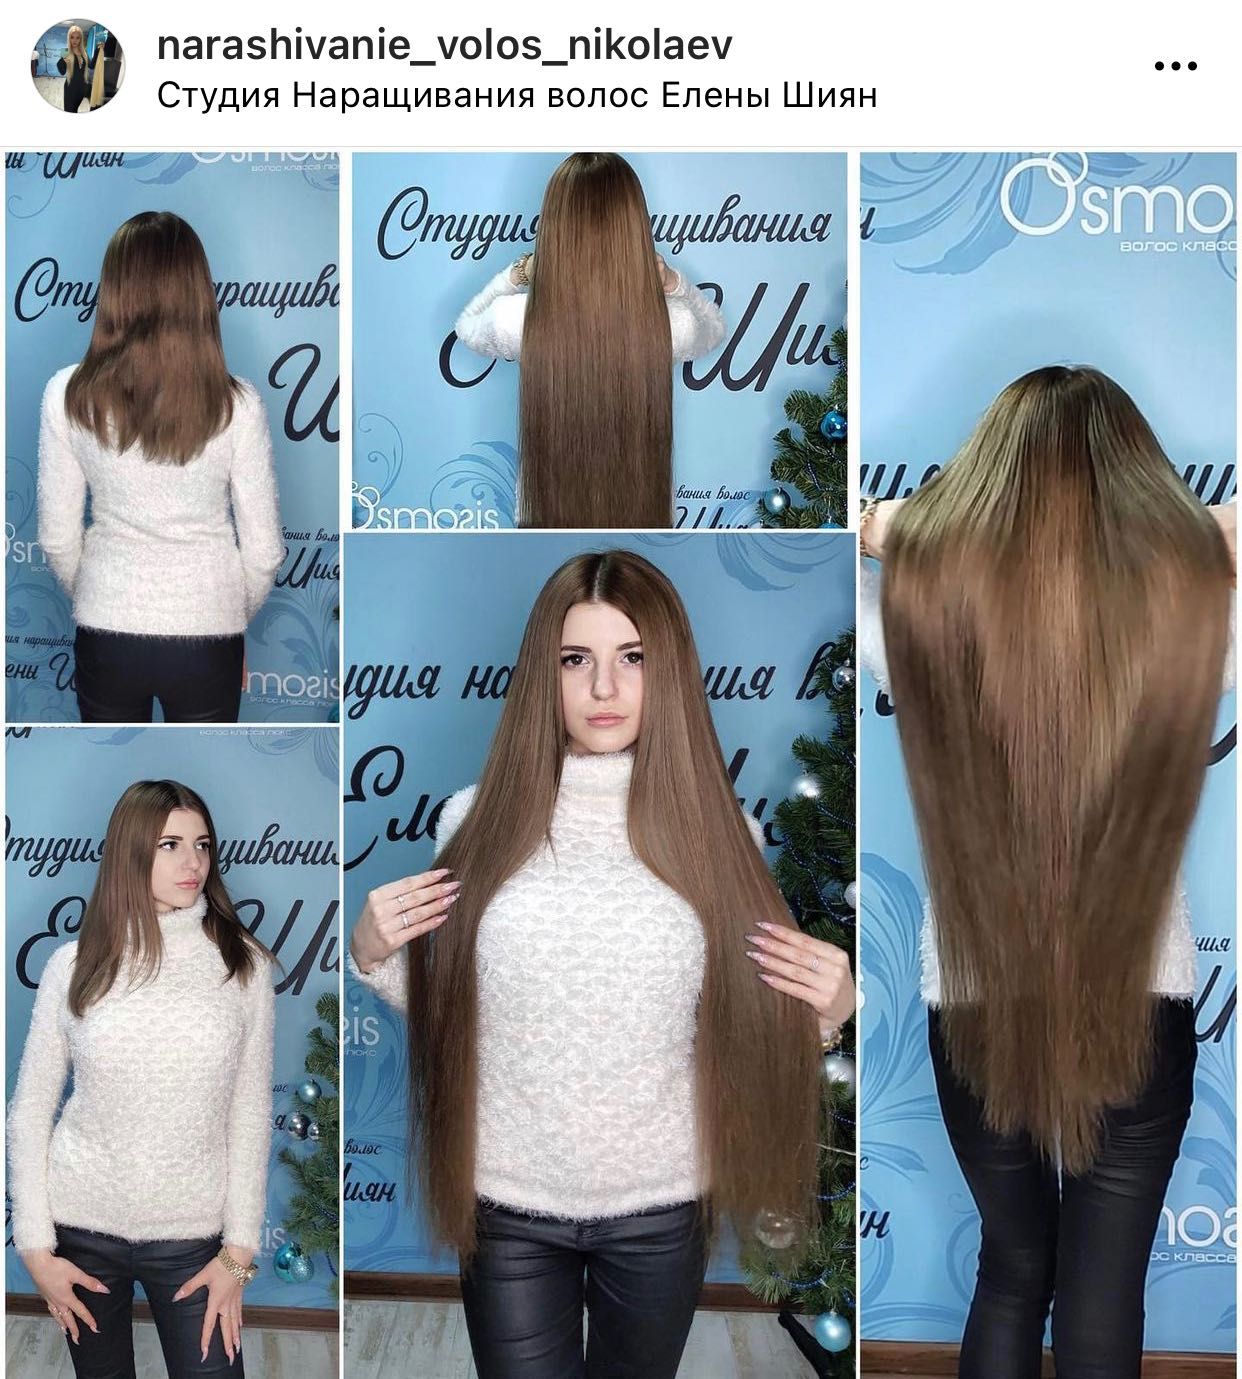 Наращивание волос. Студия наращивания волос Елены Шиян